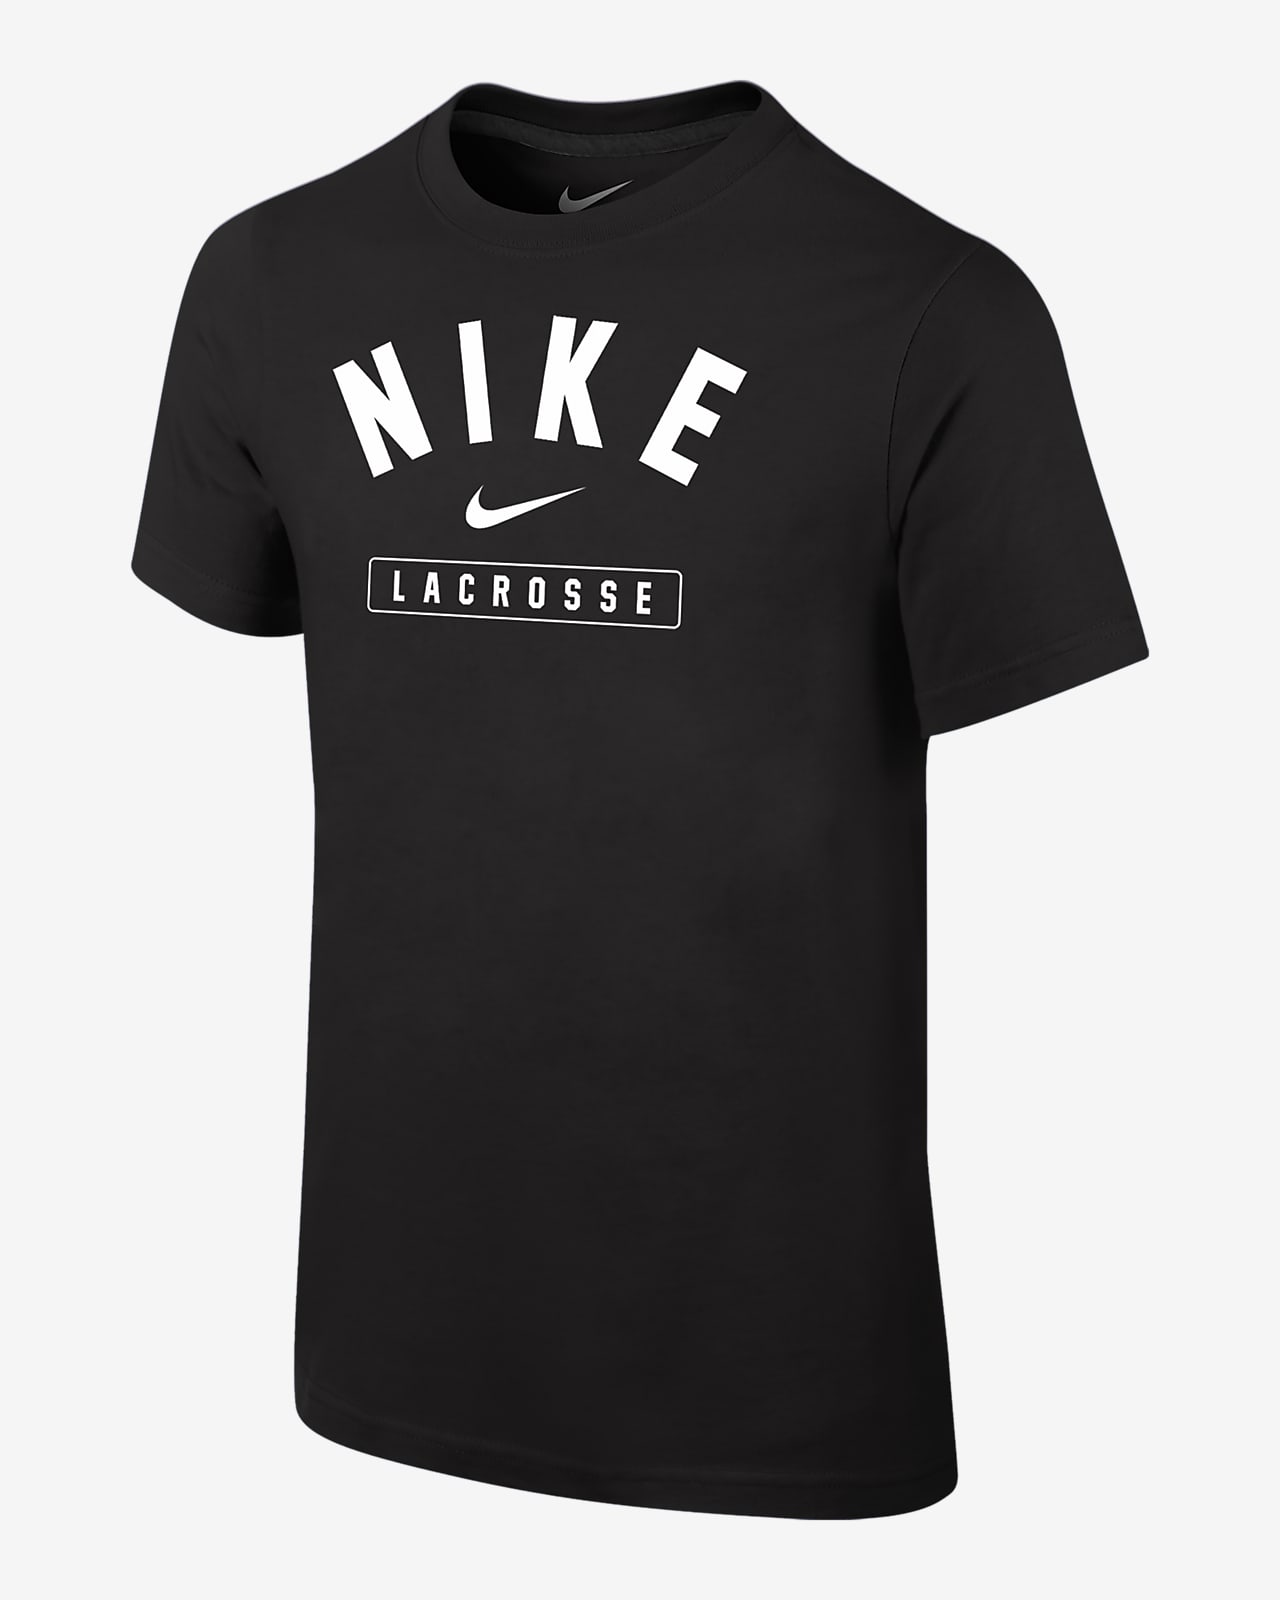 Nike Lacrosse Big Kids' (Boys') T-Shirt